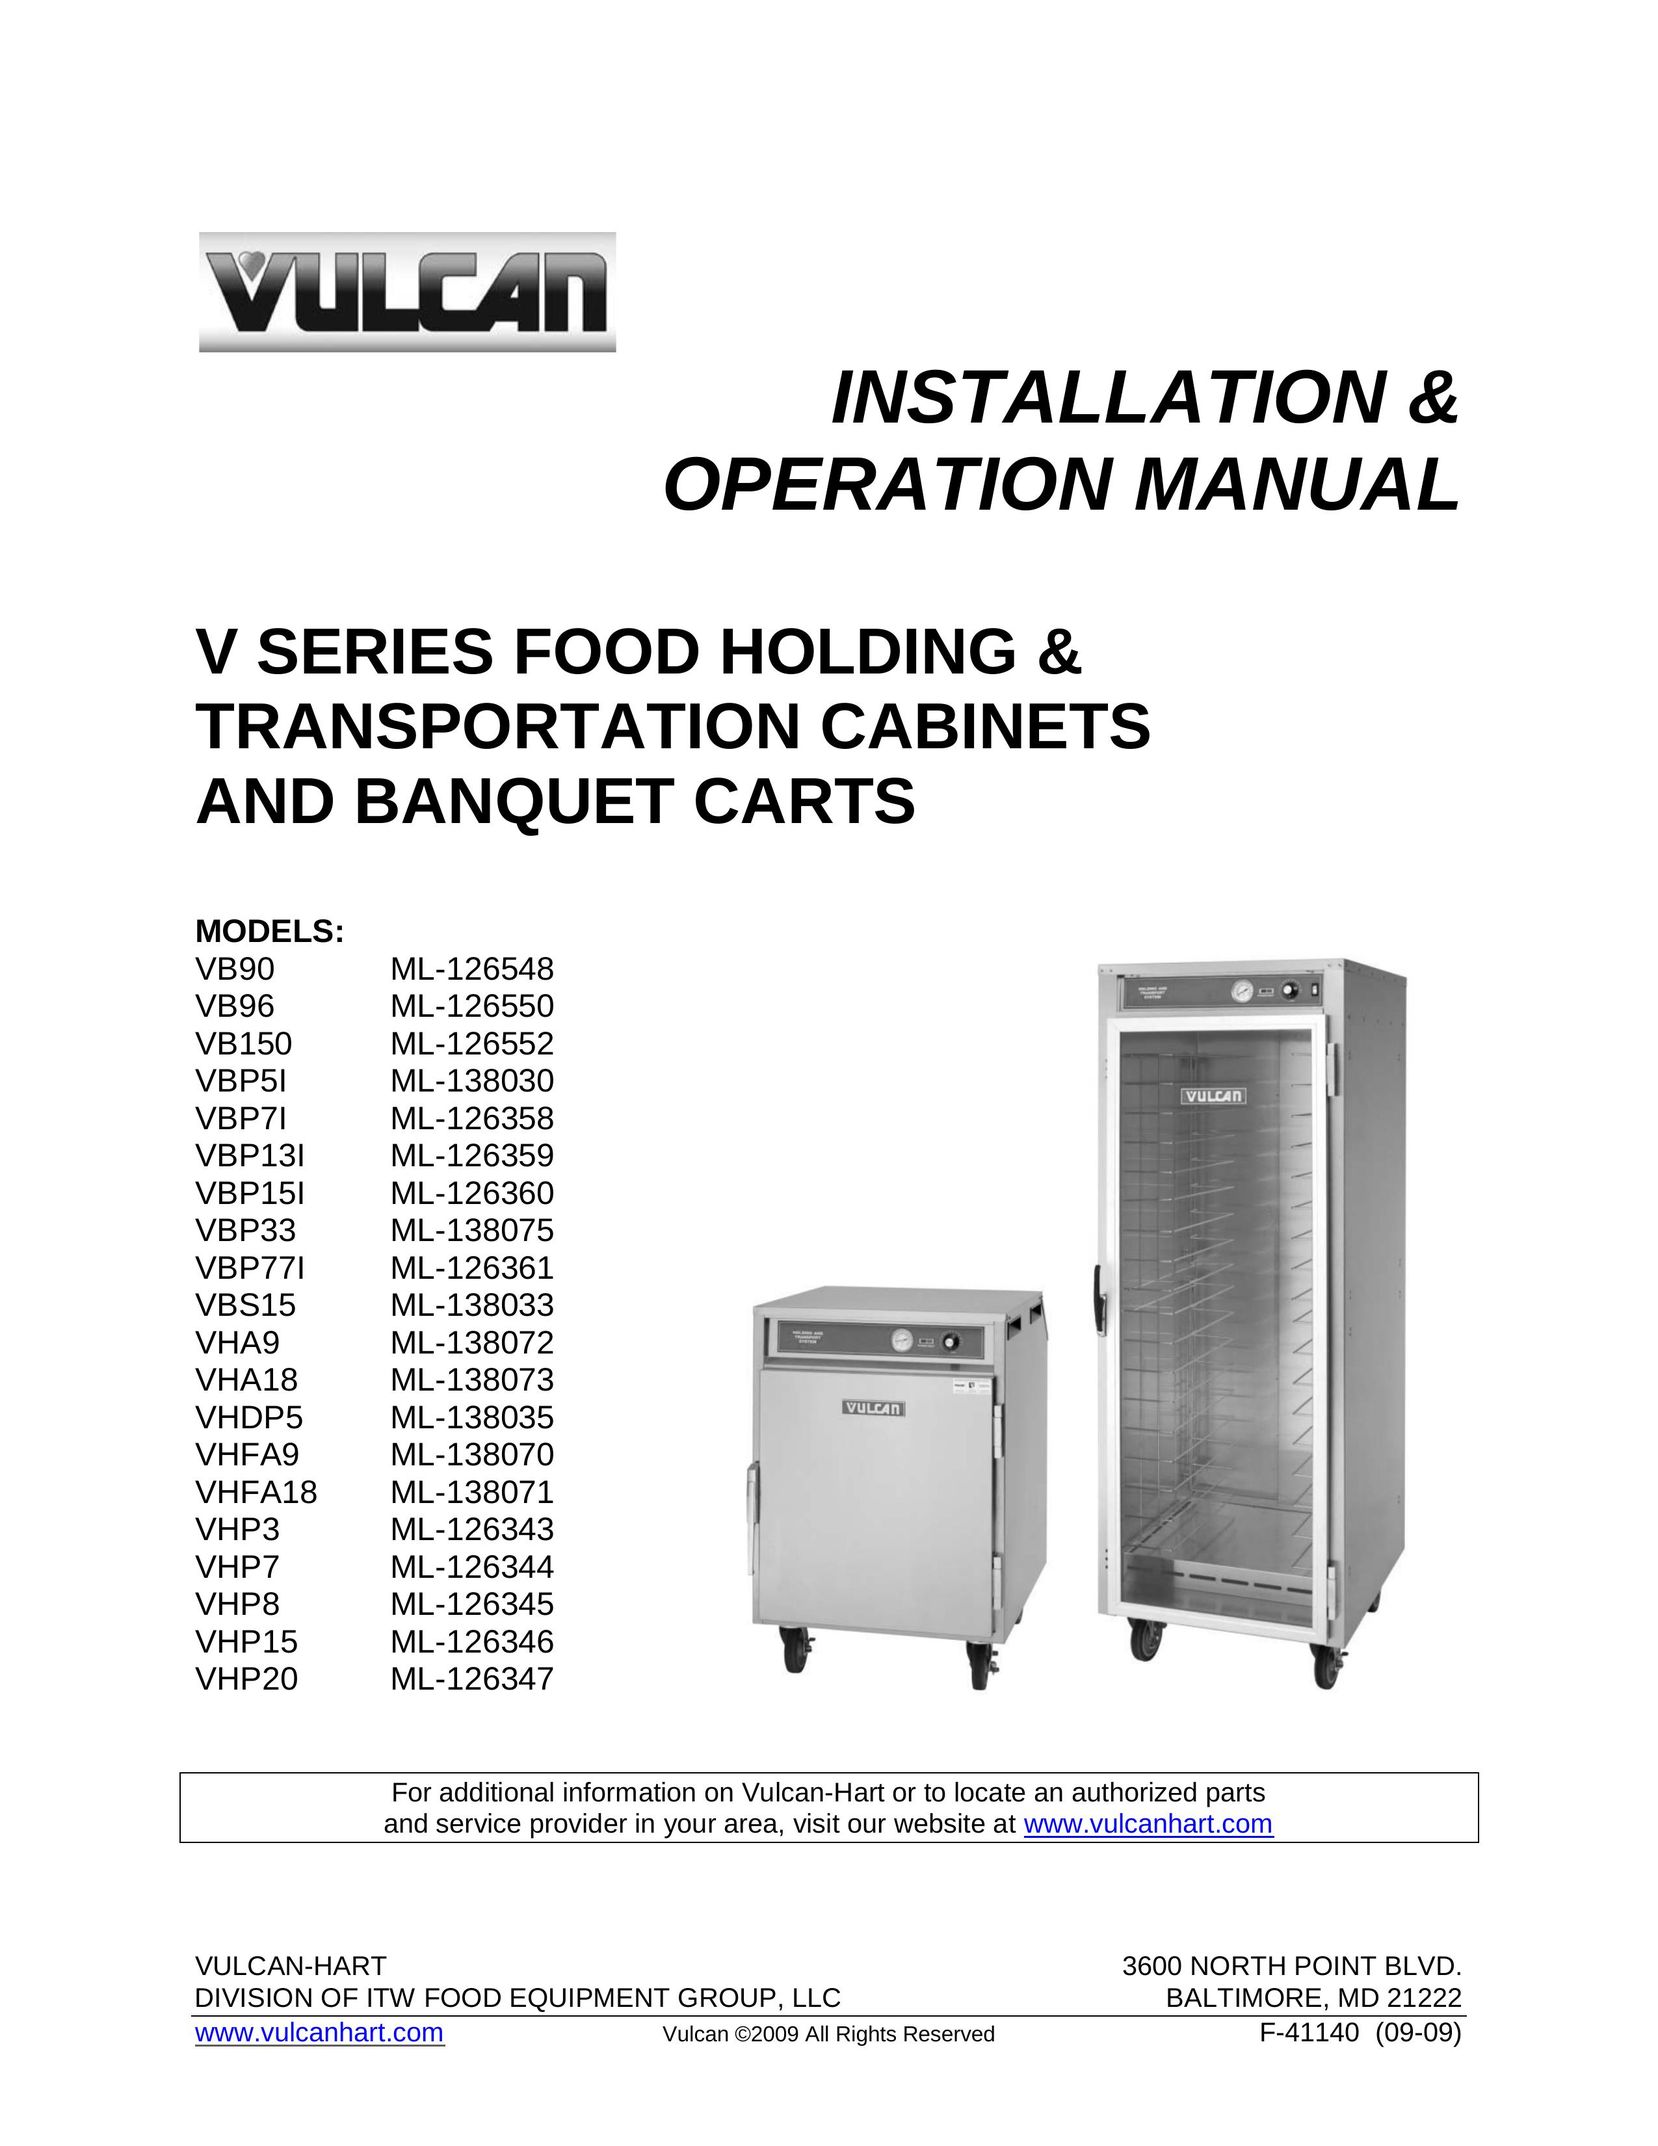 Vulcan-Hart VHFA9 ML-138070 Food Warmer User Manual